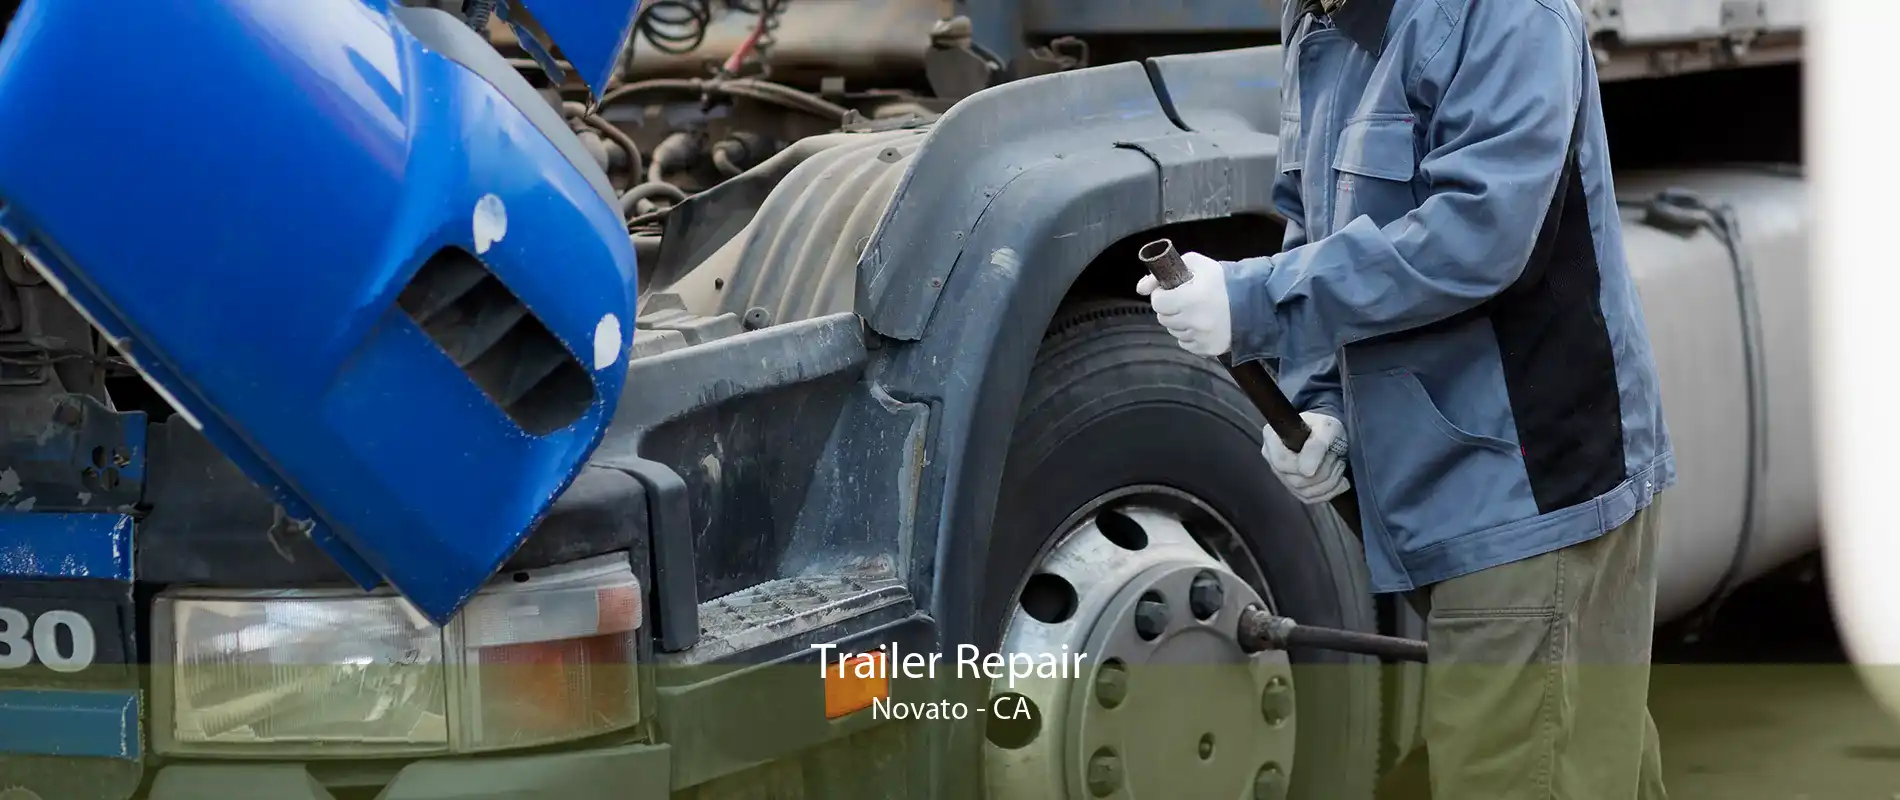 Trailer Repair Novato - CA